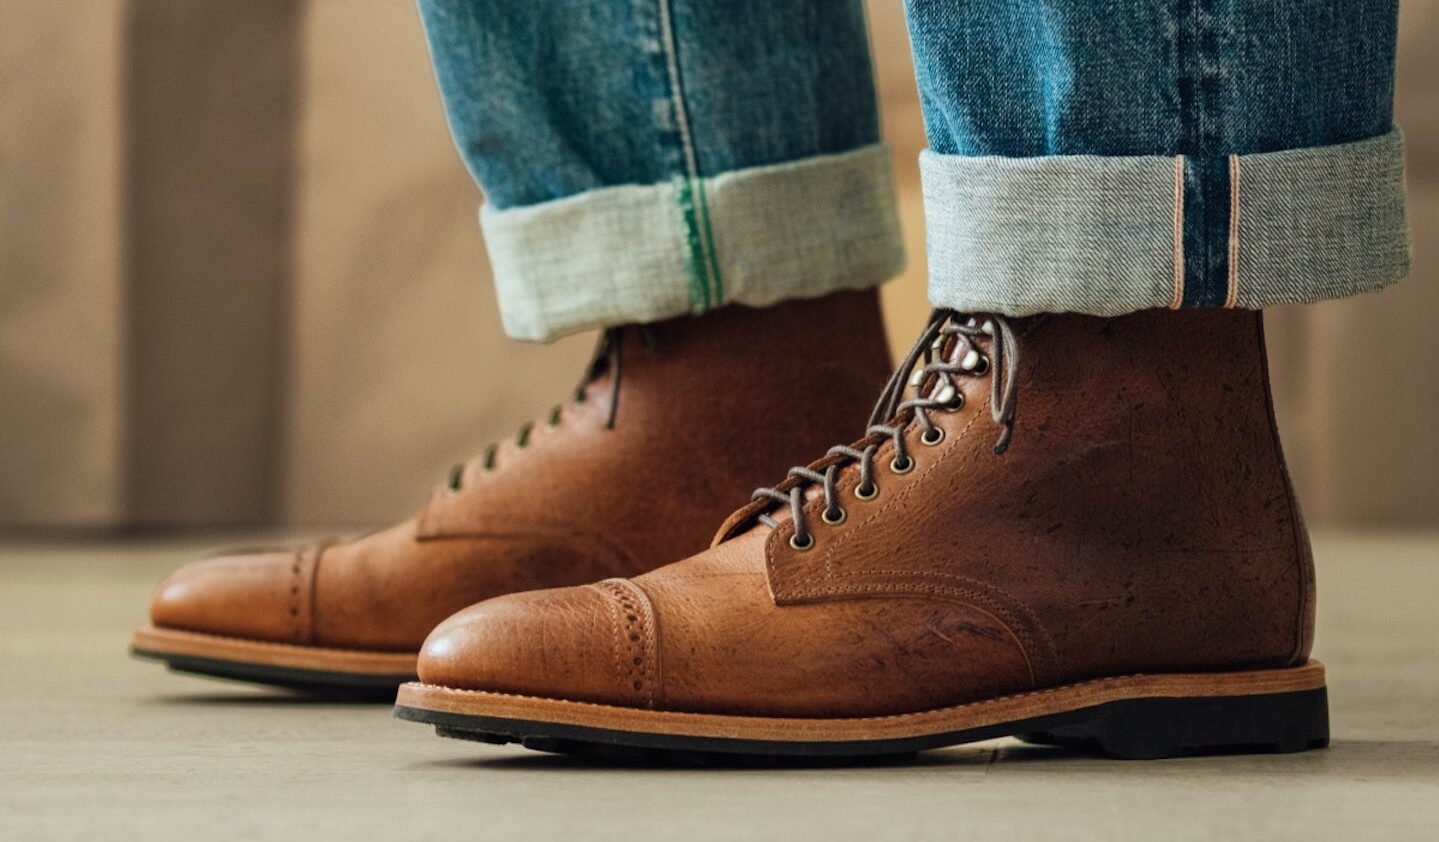 Shoes ‘n’ Boots of the Week: Oak Street’s Lakeshore In Shrunken Kudu ...